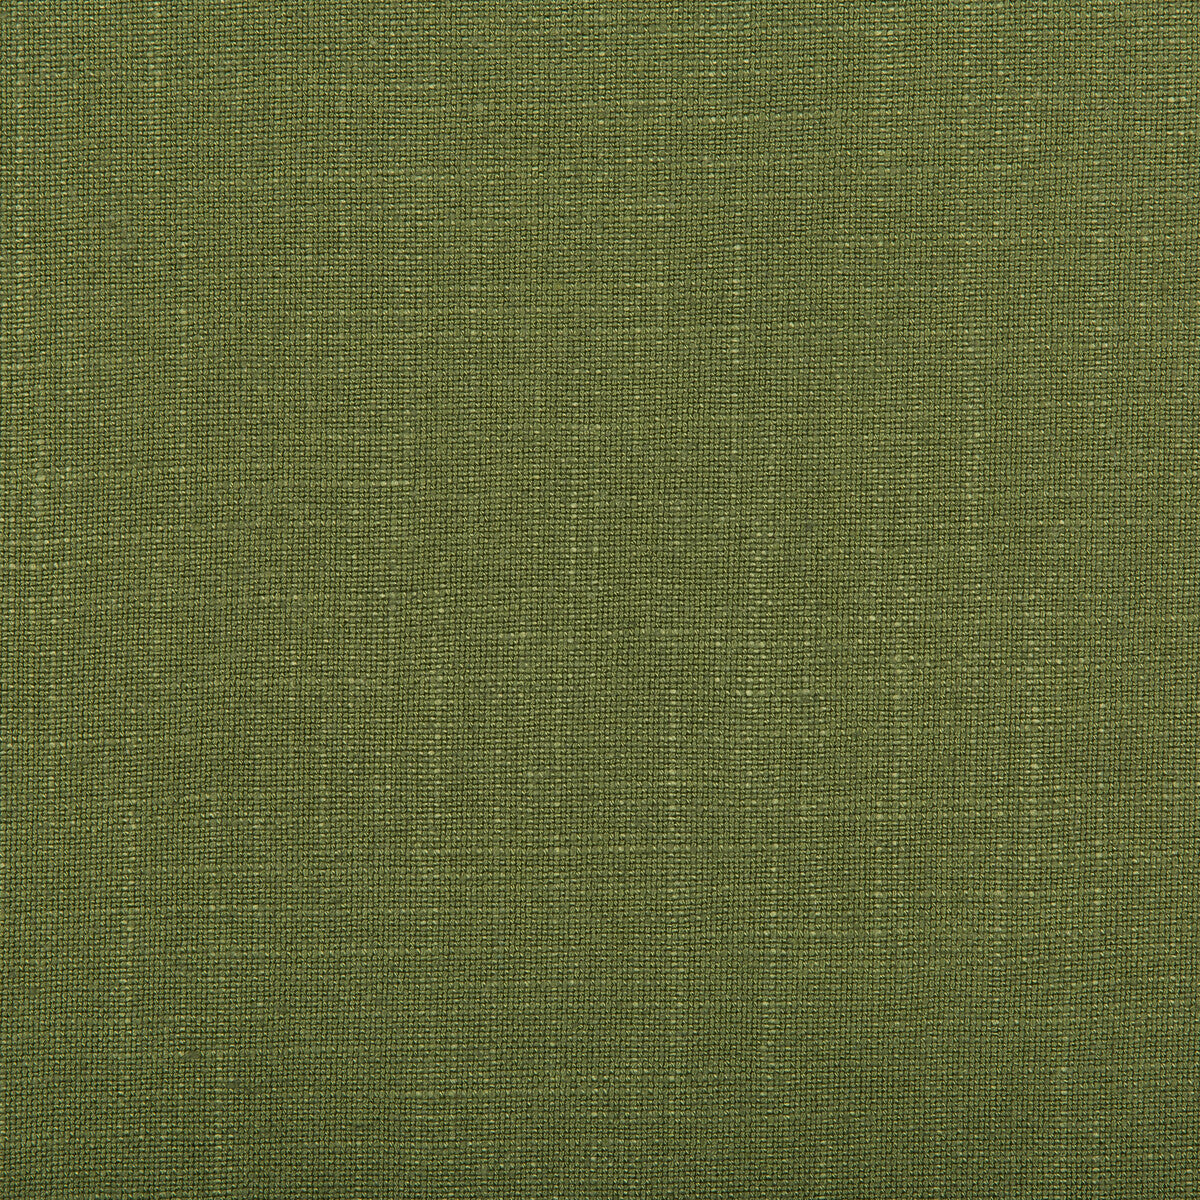 Aura fabric in vine color - pattern 35520.13.0 - by Kravet Design